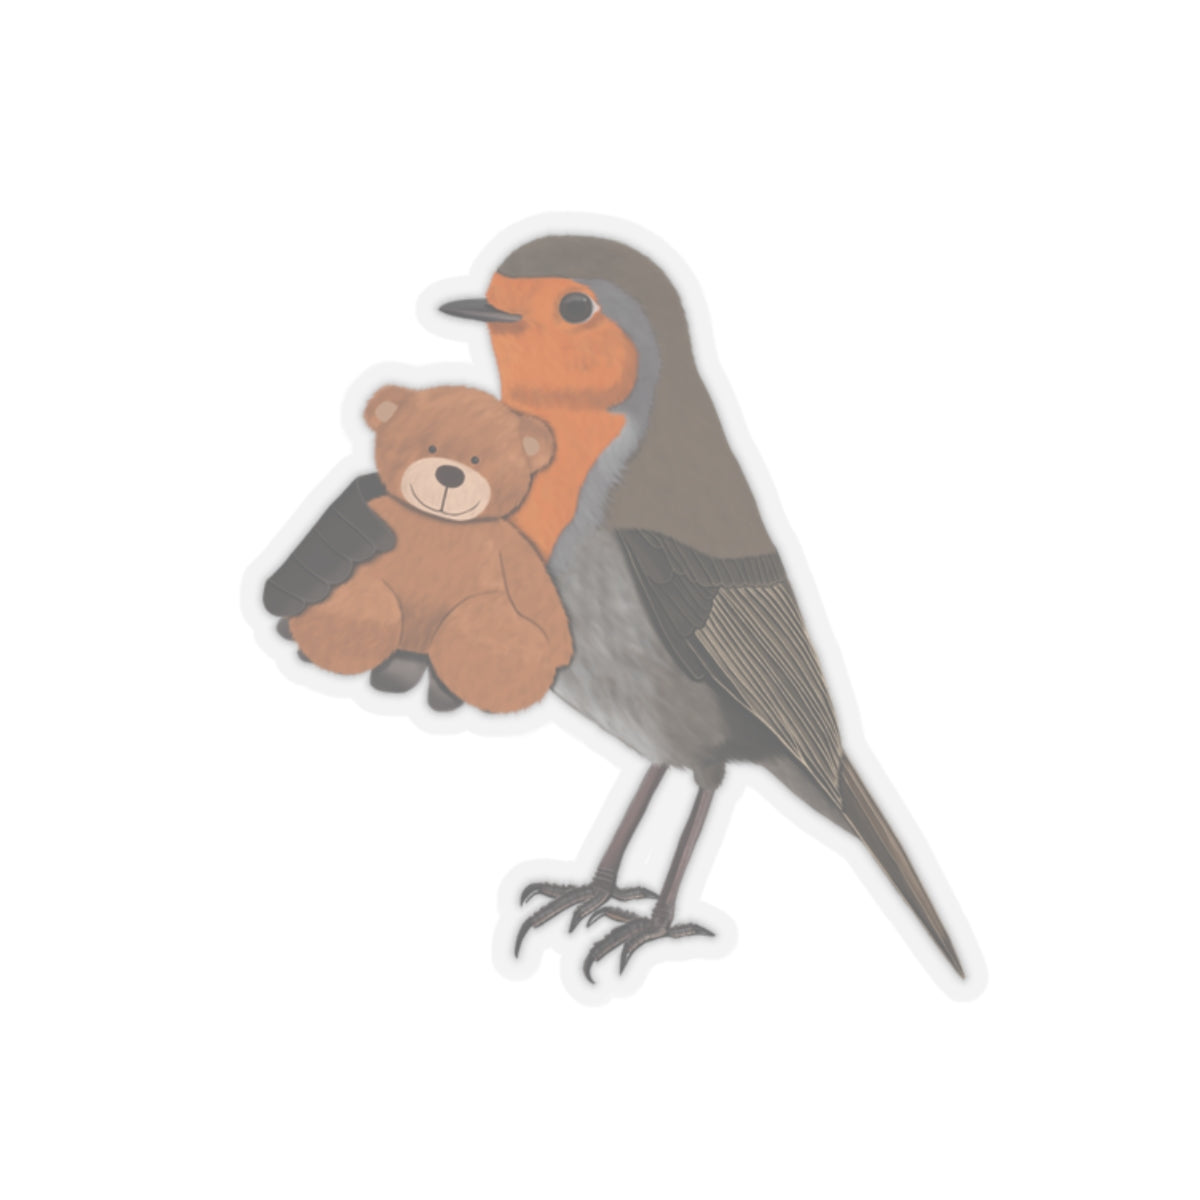 Robin Bird with Teddy Bear Kiss-Cut Sticker